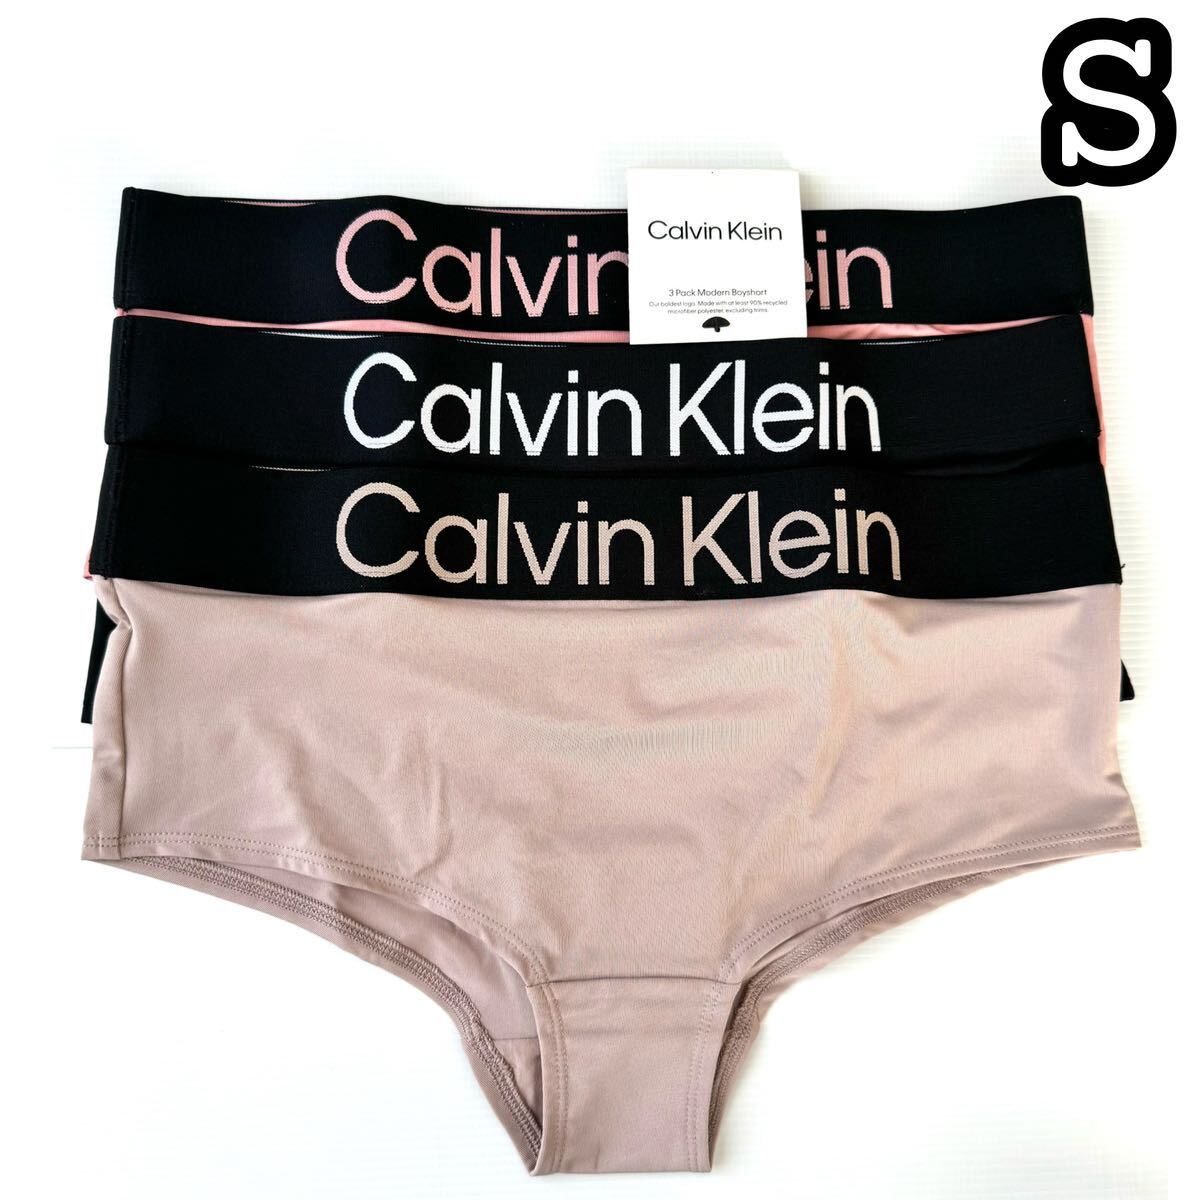  largish Logo Calvin Klein Calvin Klein shorts S size 3 sheets set 